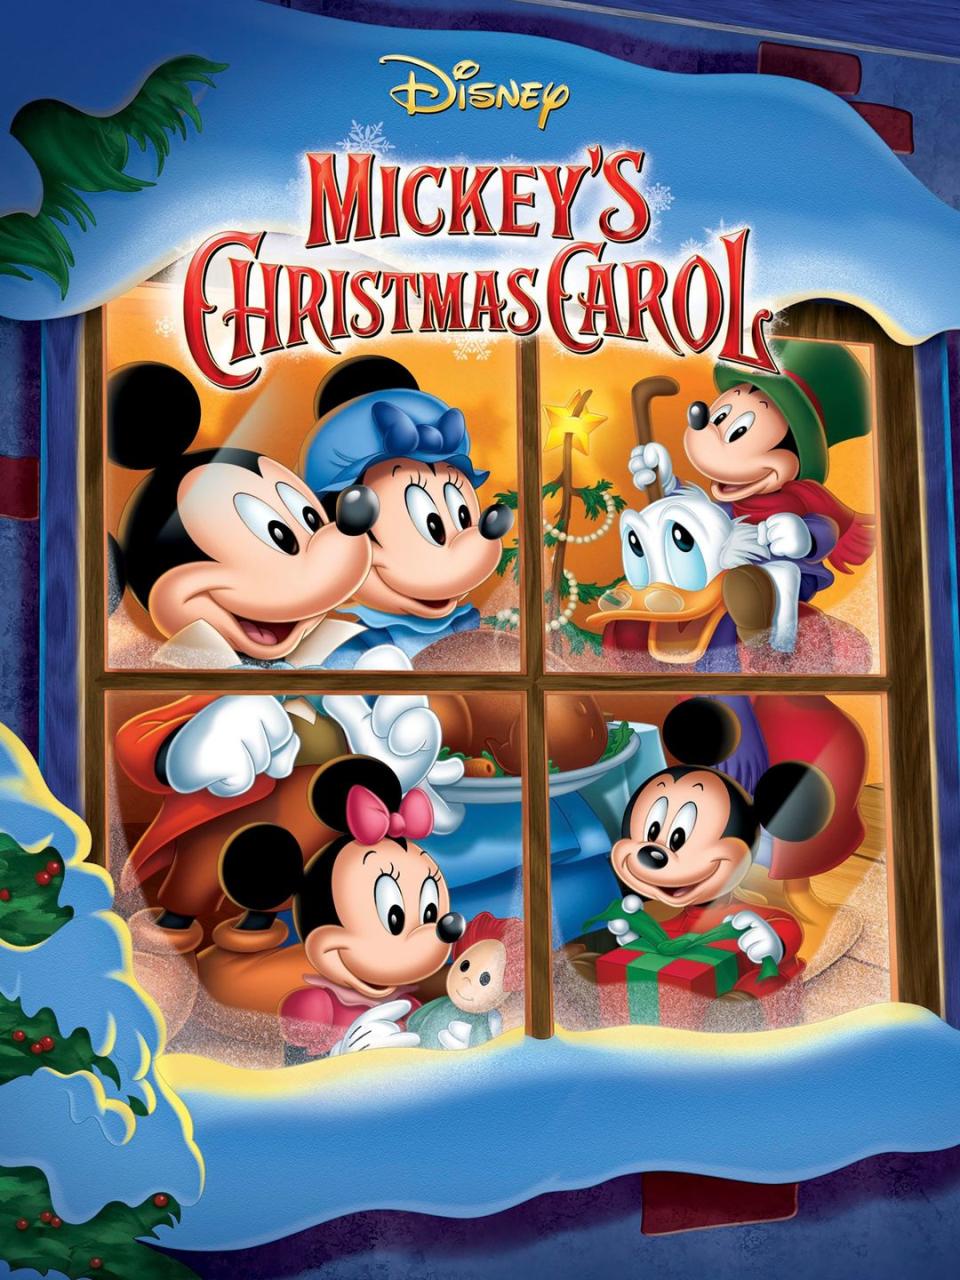 40) 'Mickey's Christmas Carol'